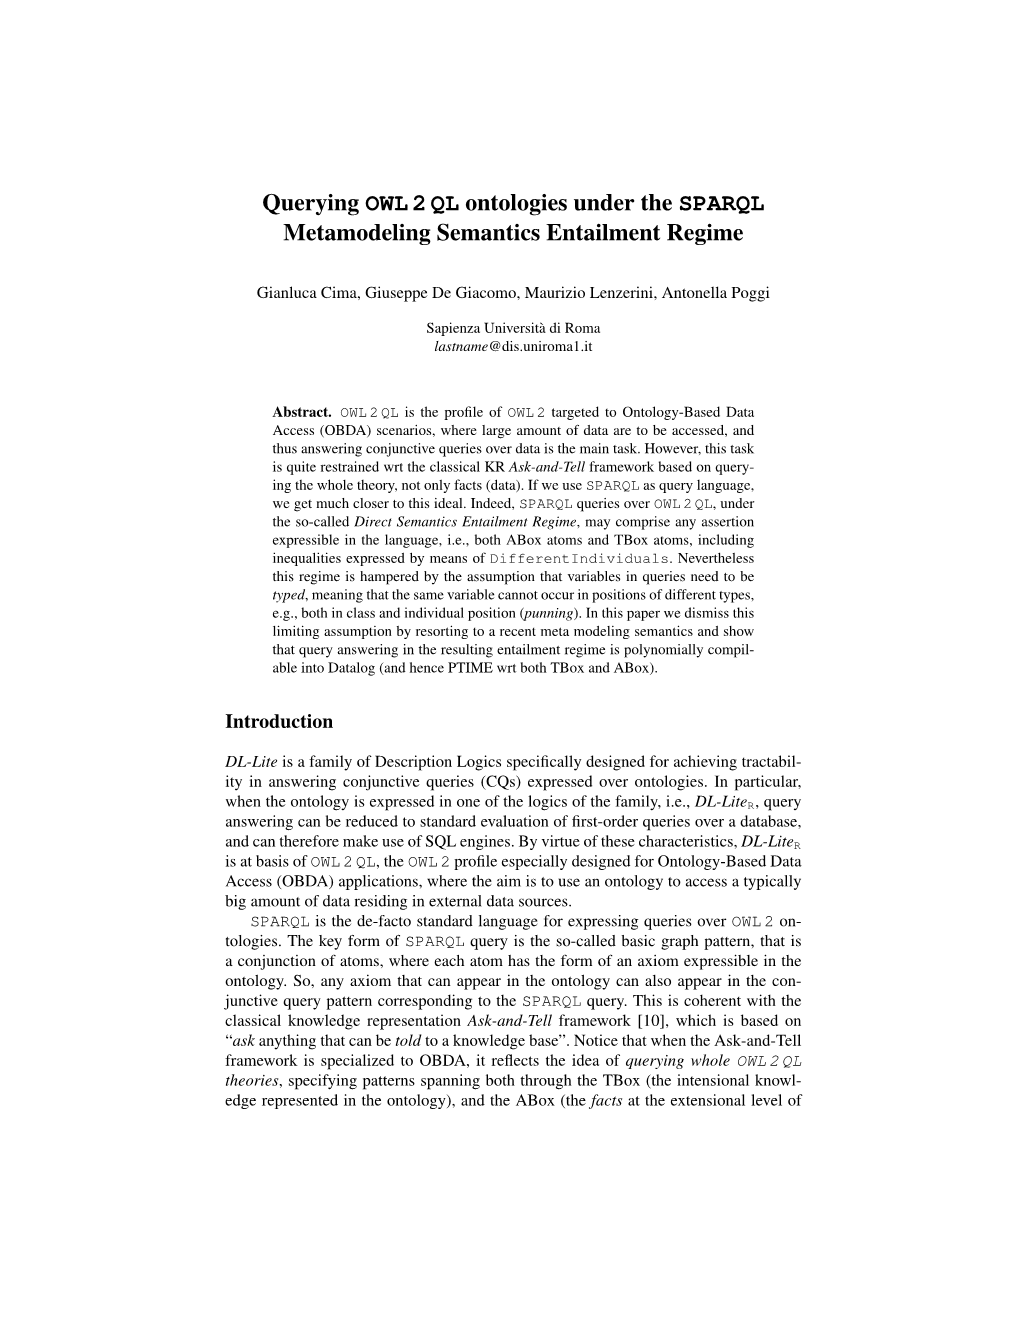 Querying OWL 2 QL Ontologies Under the SPARQL Metamodeling Semantics Entailment Regime